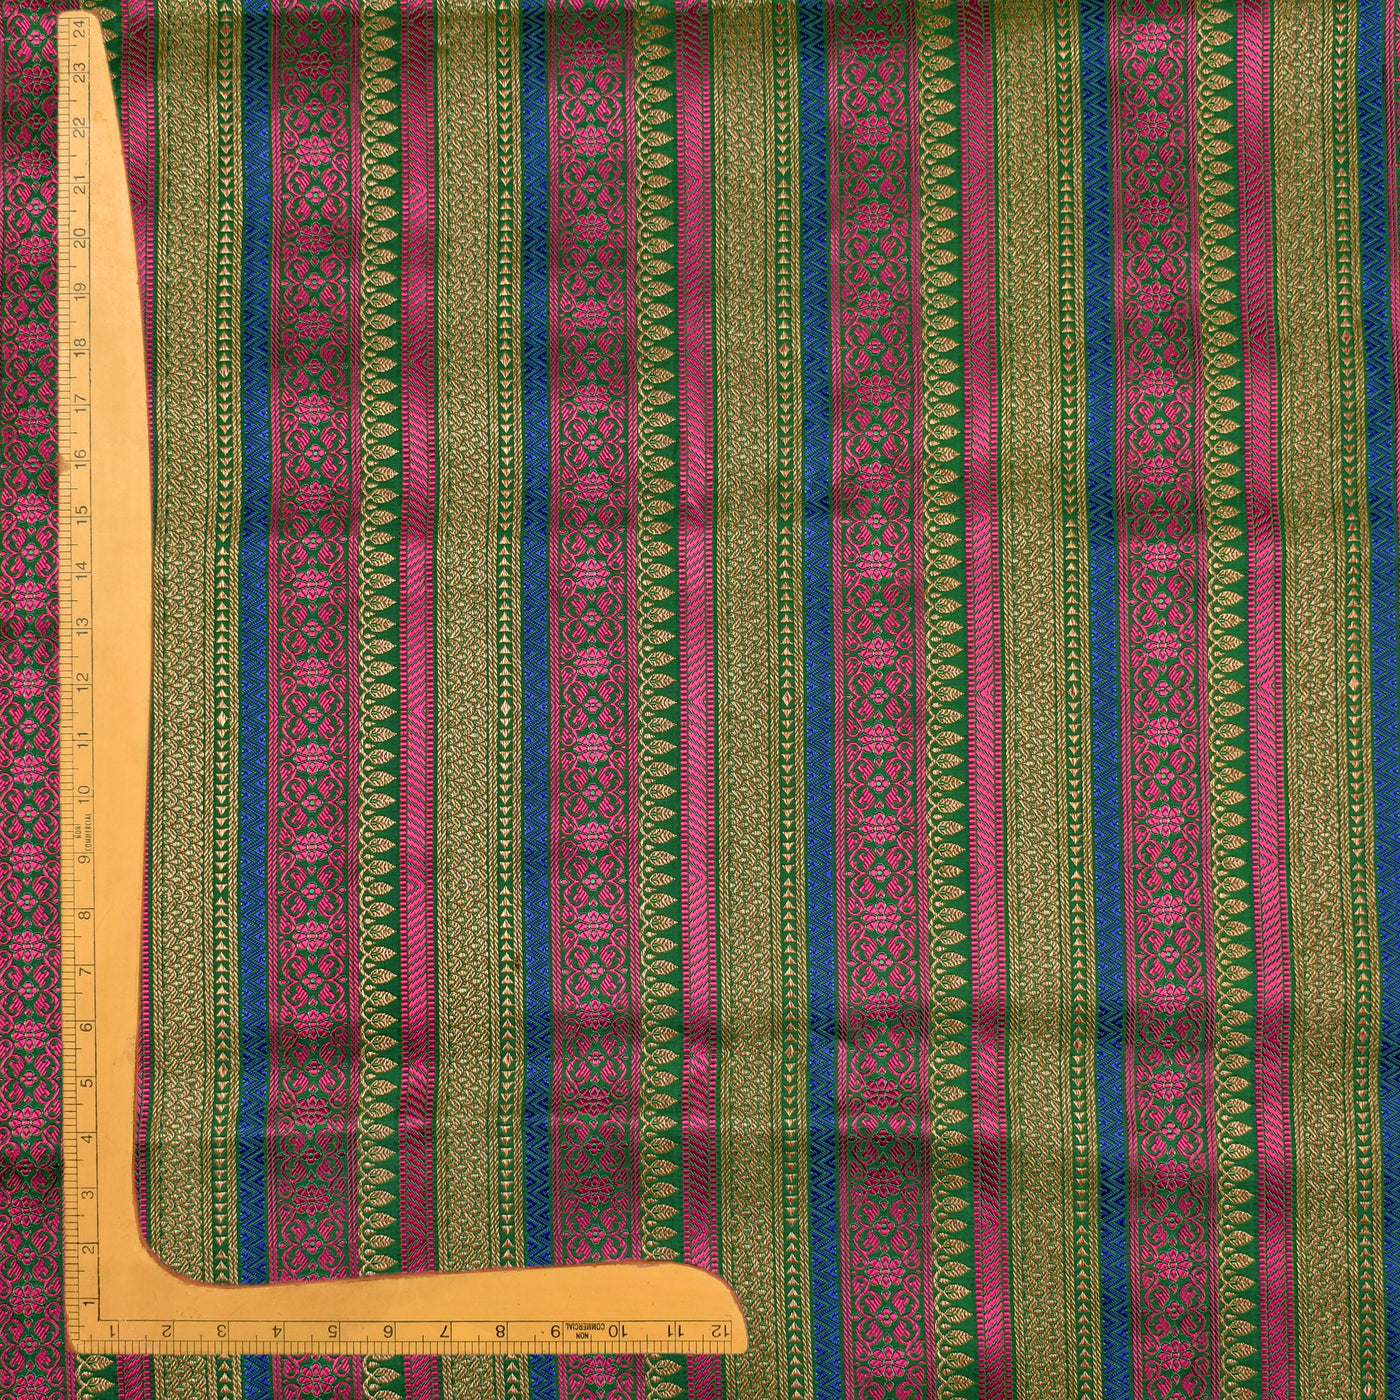 Green and Magenta Banarasi Silk Fabric with Stripes Design